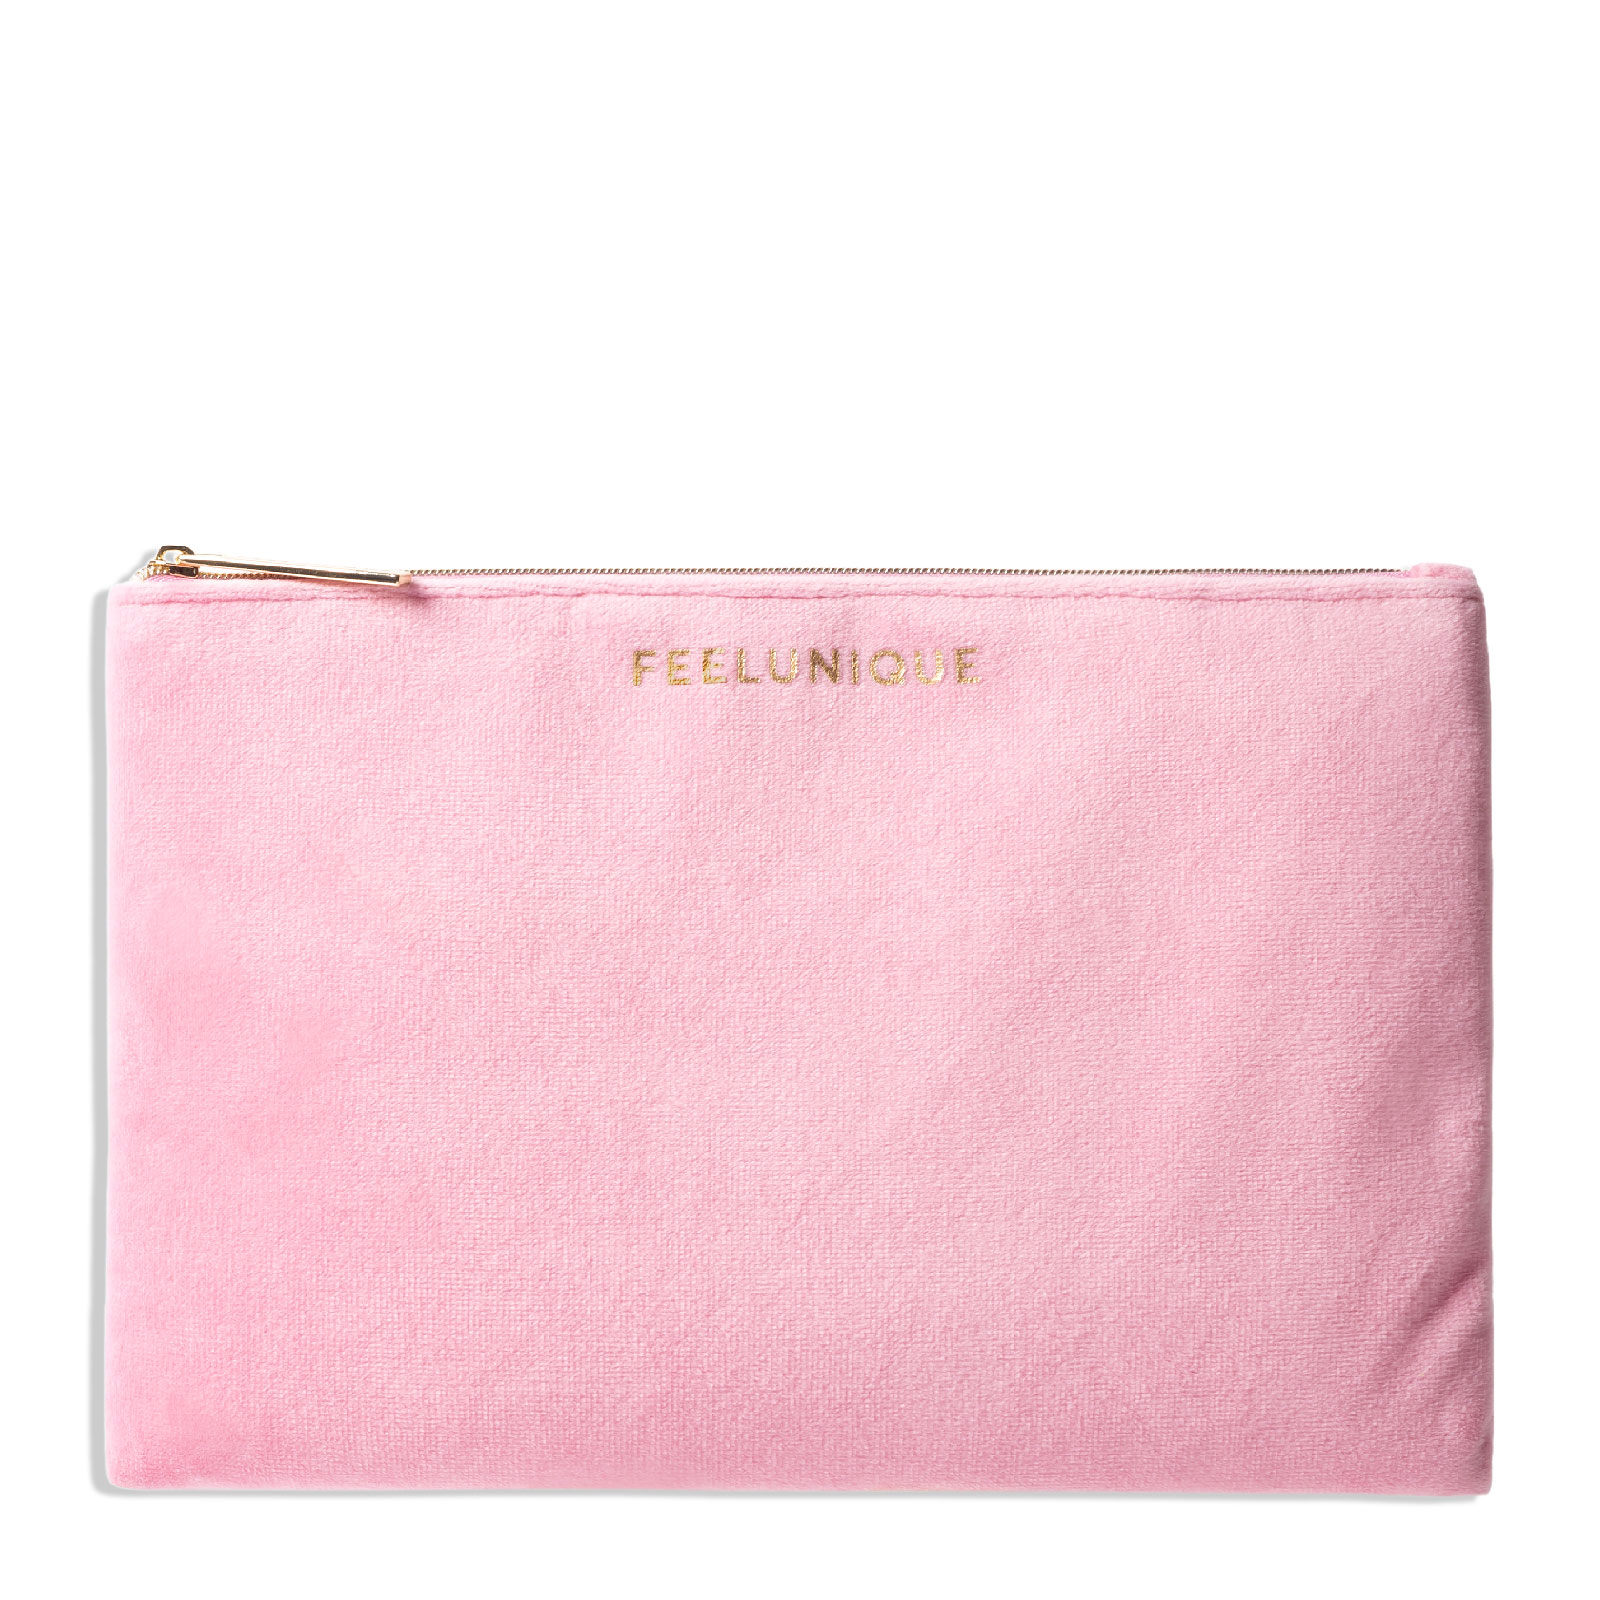 Feelunique 粉色天鹅绒化妆包